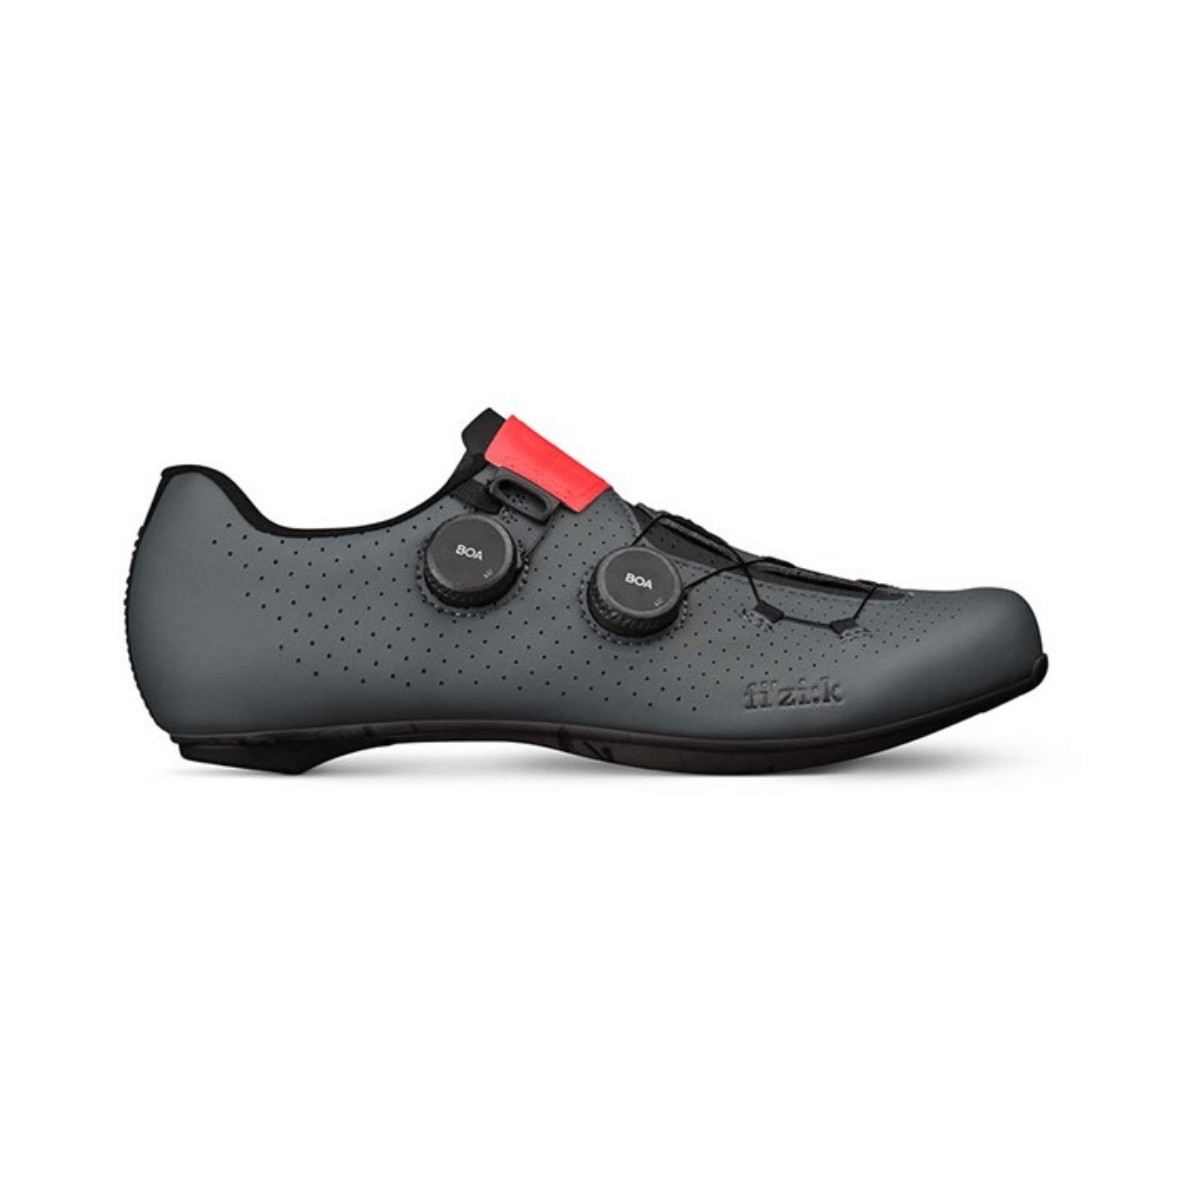 Chaussures Fizik Vento Infinito Carbon 2 Gris Corail, Taille 41 - EUR